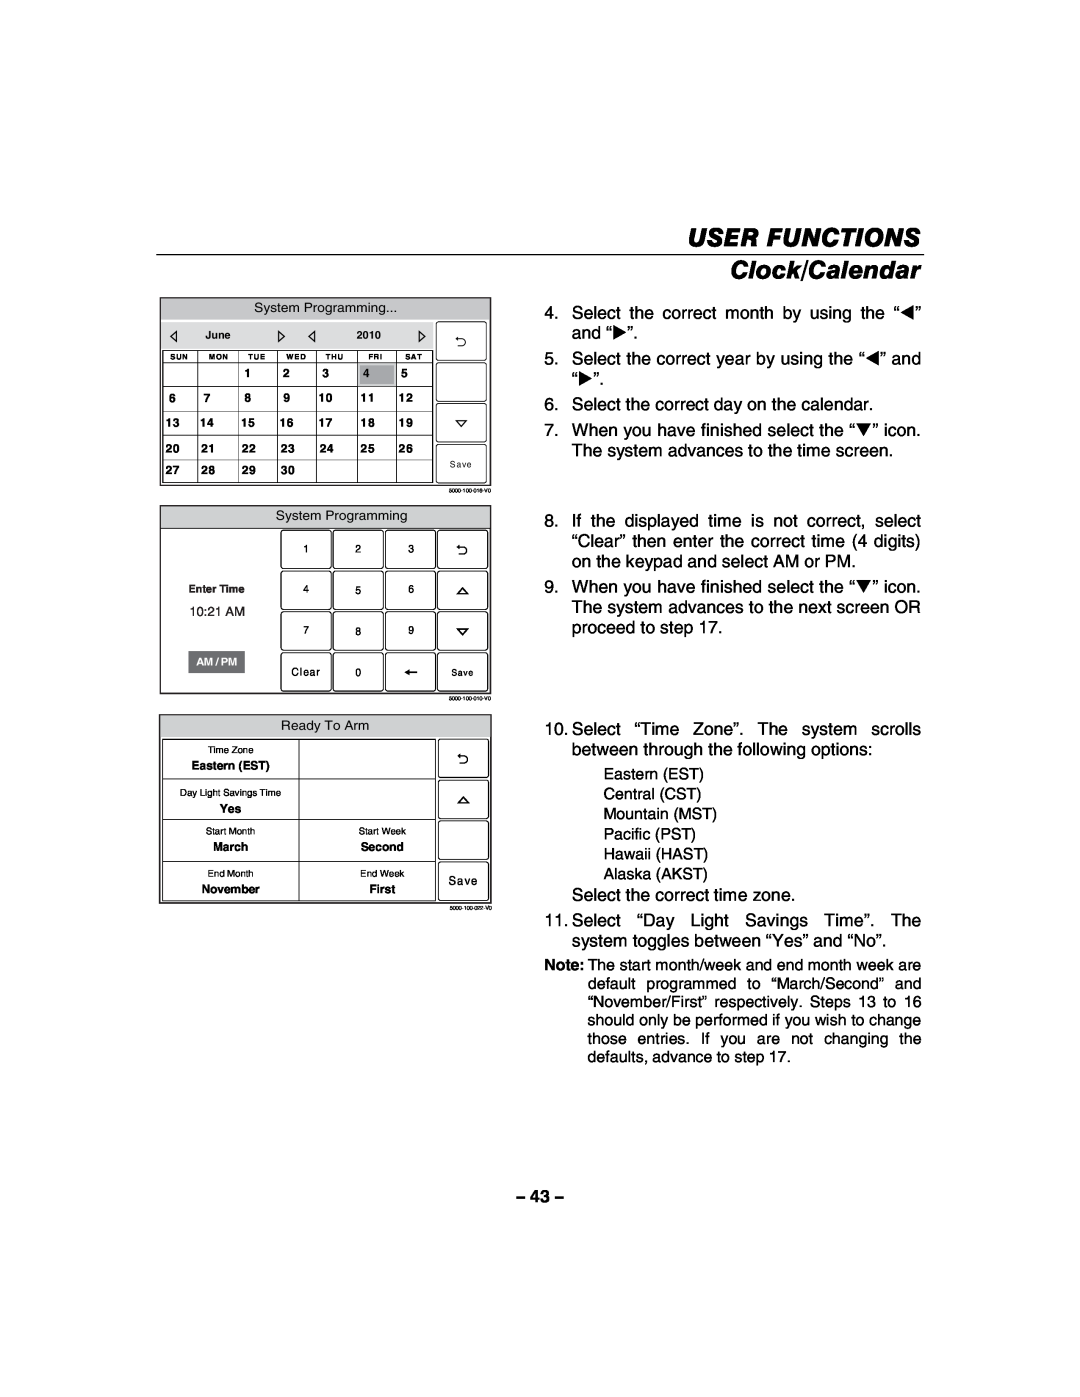 Honeywell 800-06894 manual Clock/Calendar, User Functions 